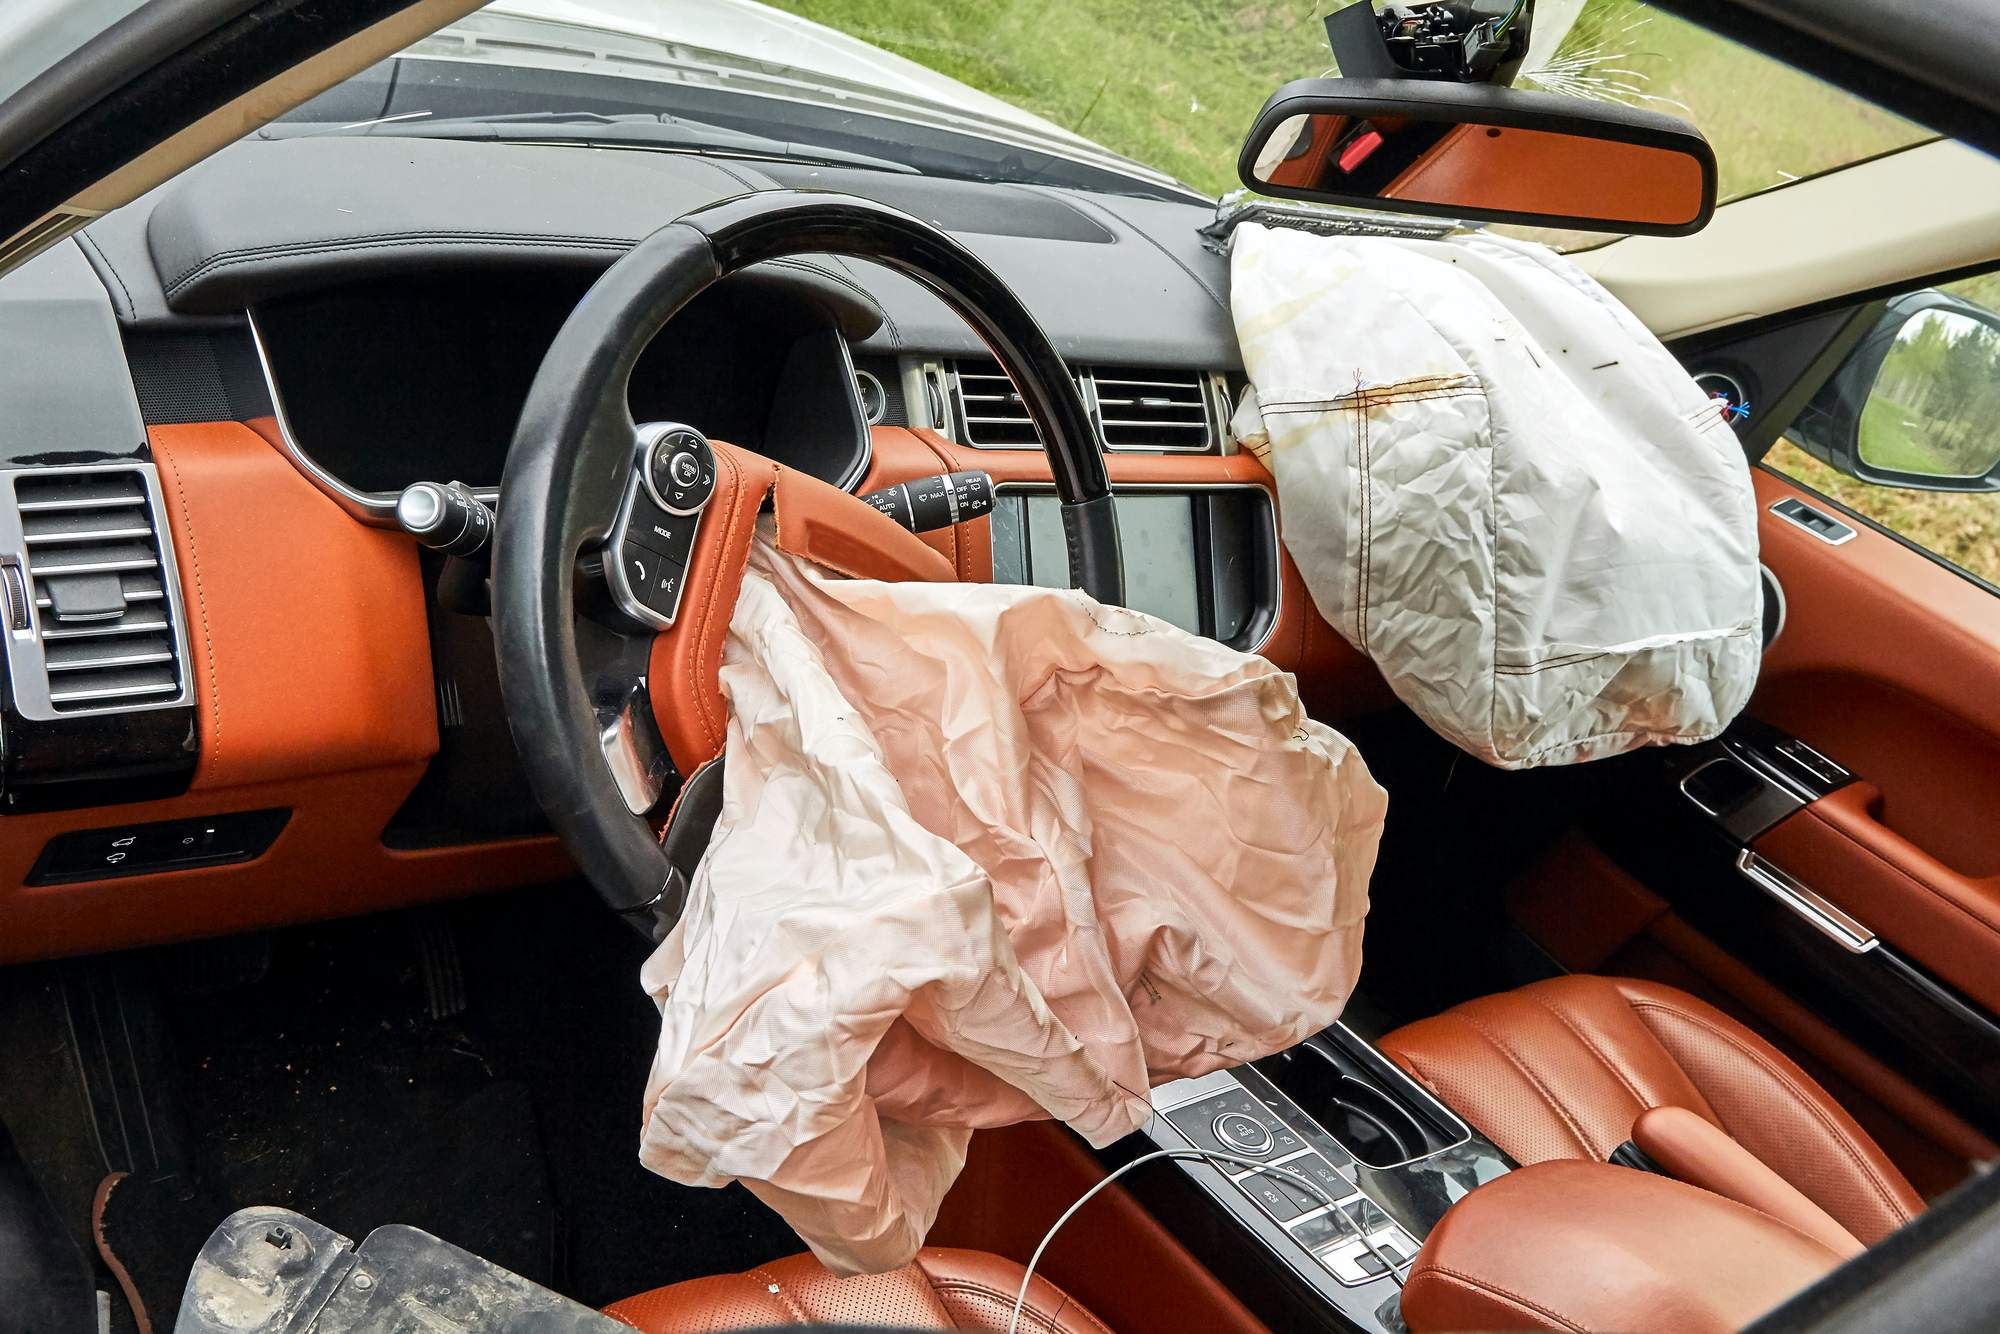 deflated airbags inside car regarding several airbag recalls